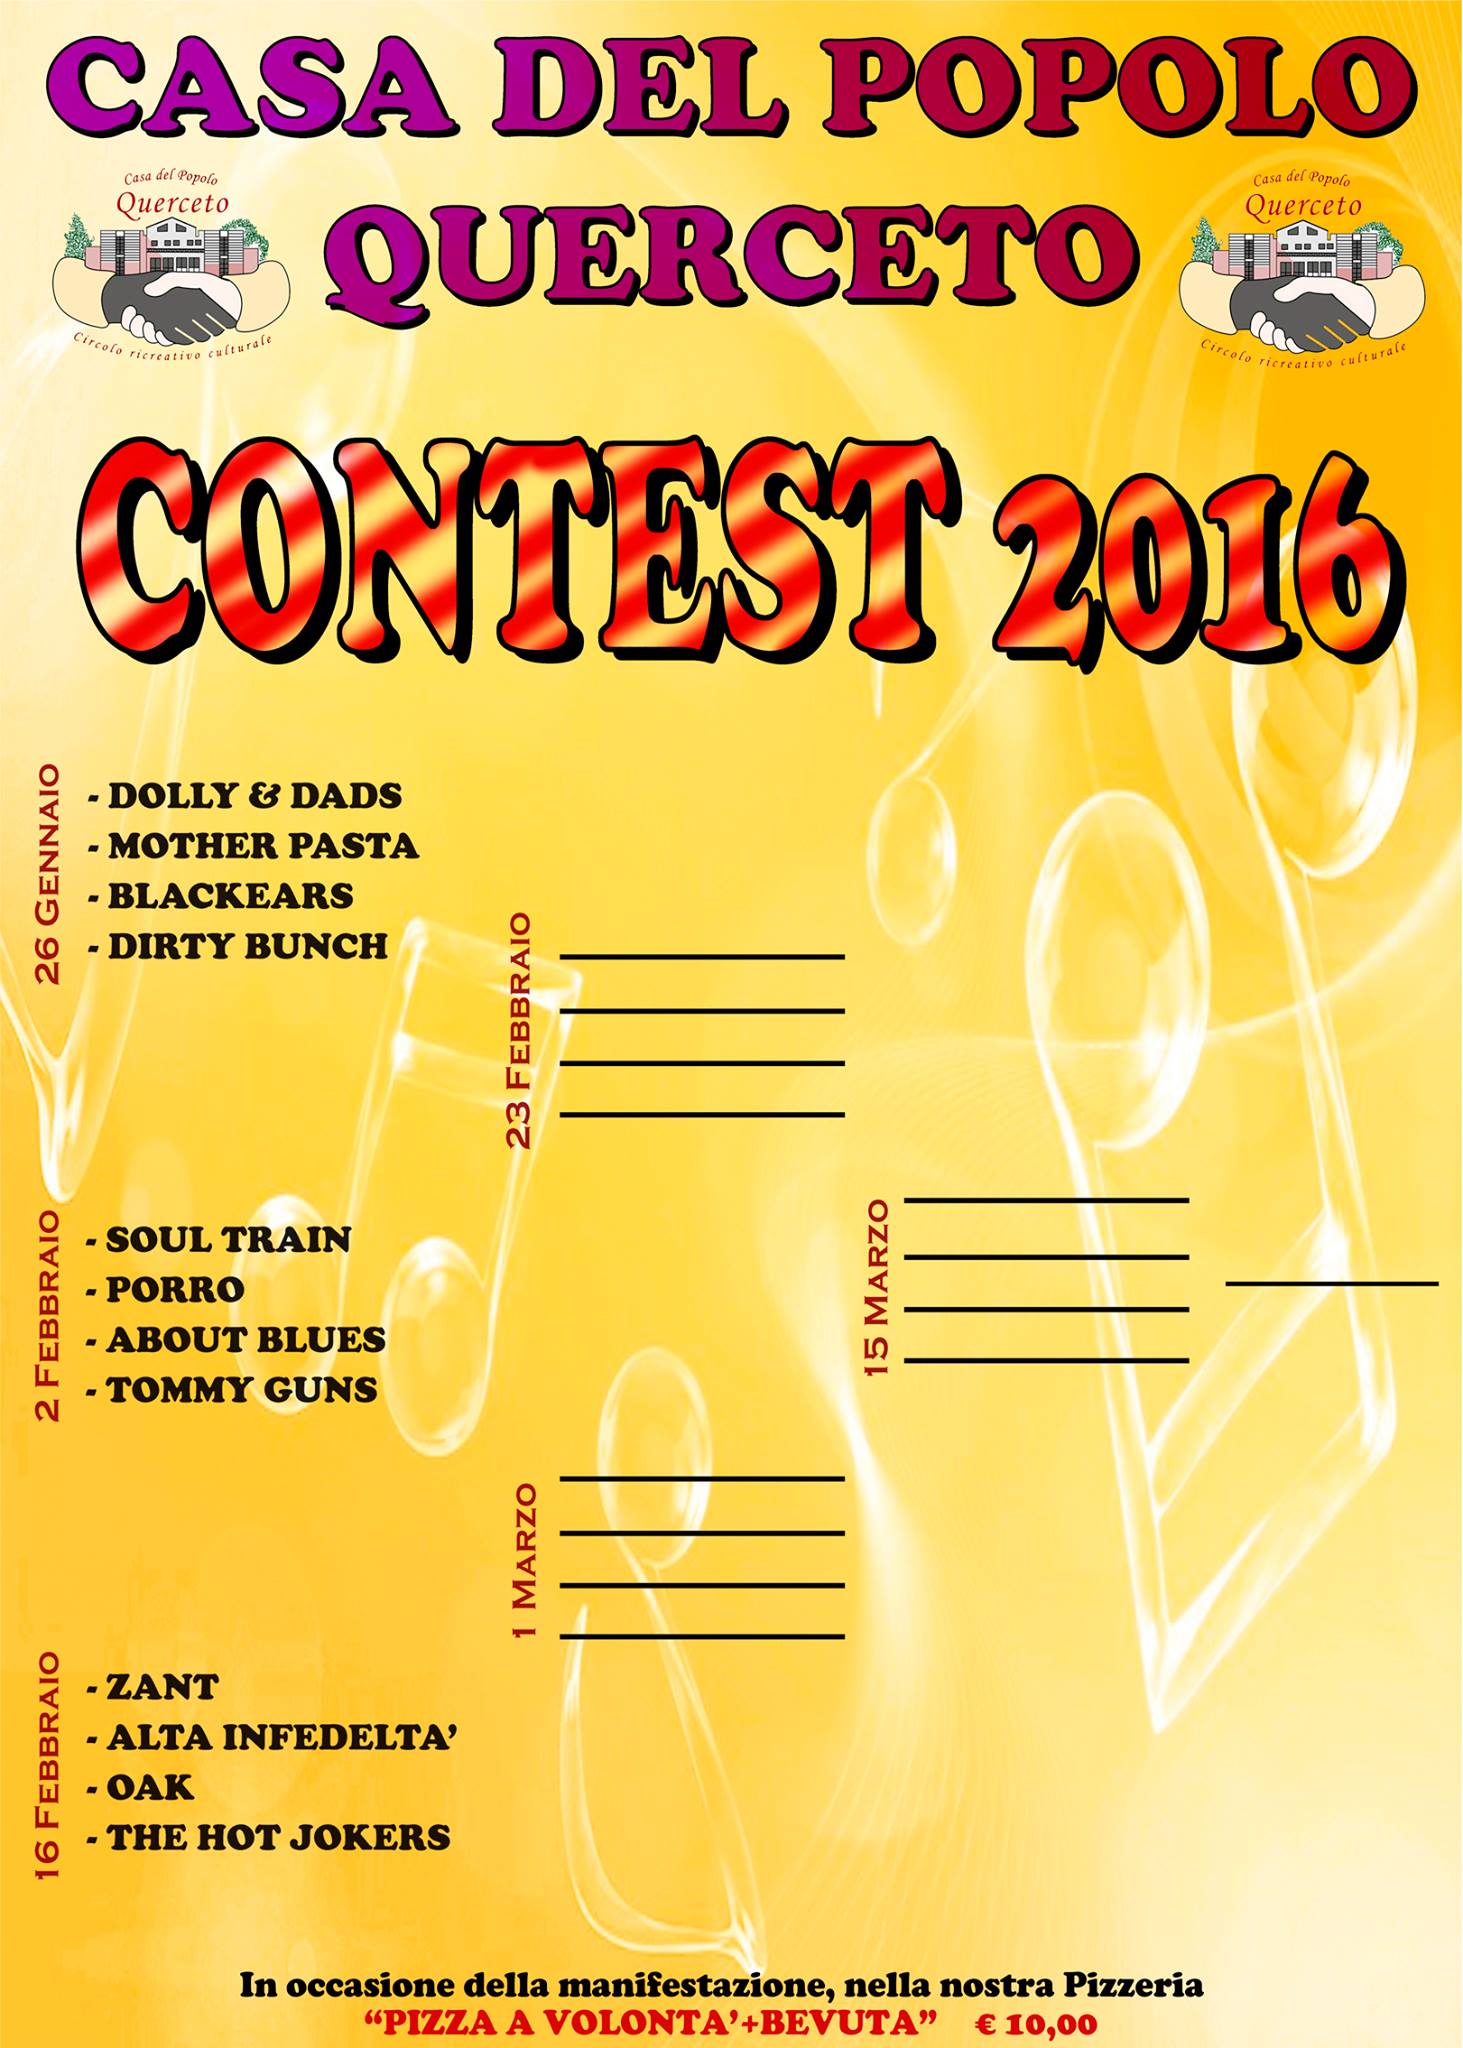 Contest 2016